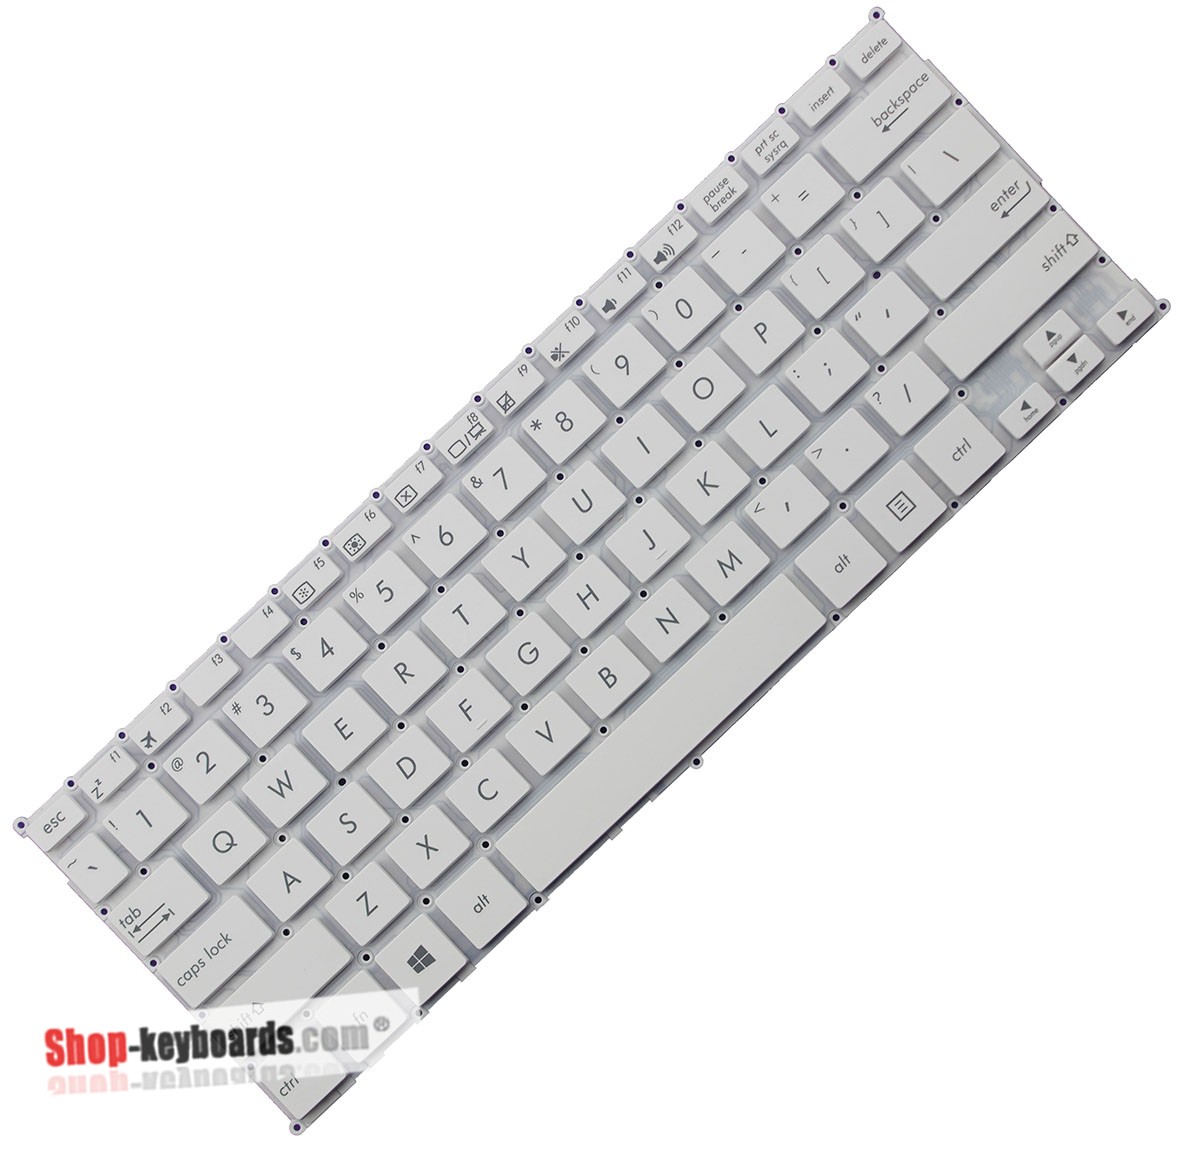 Asus XK6 Keyboard replacement